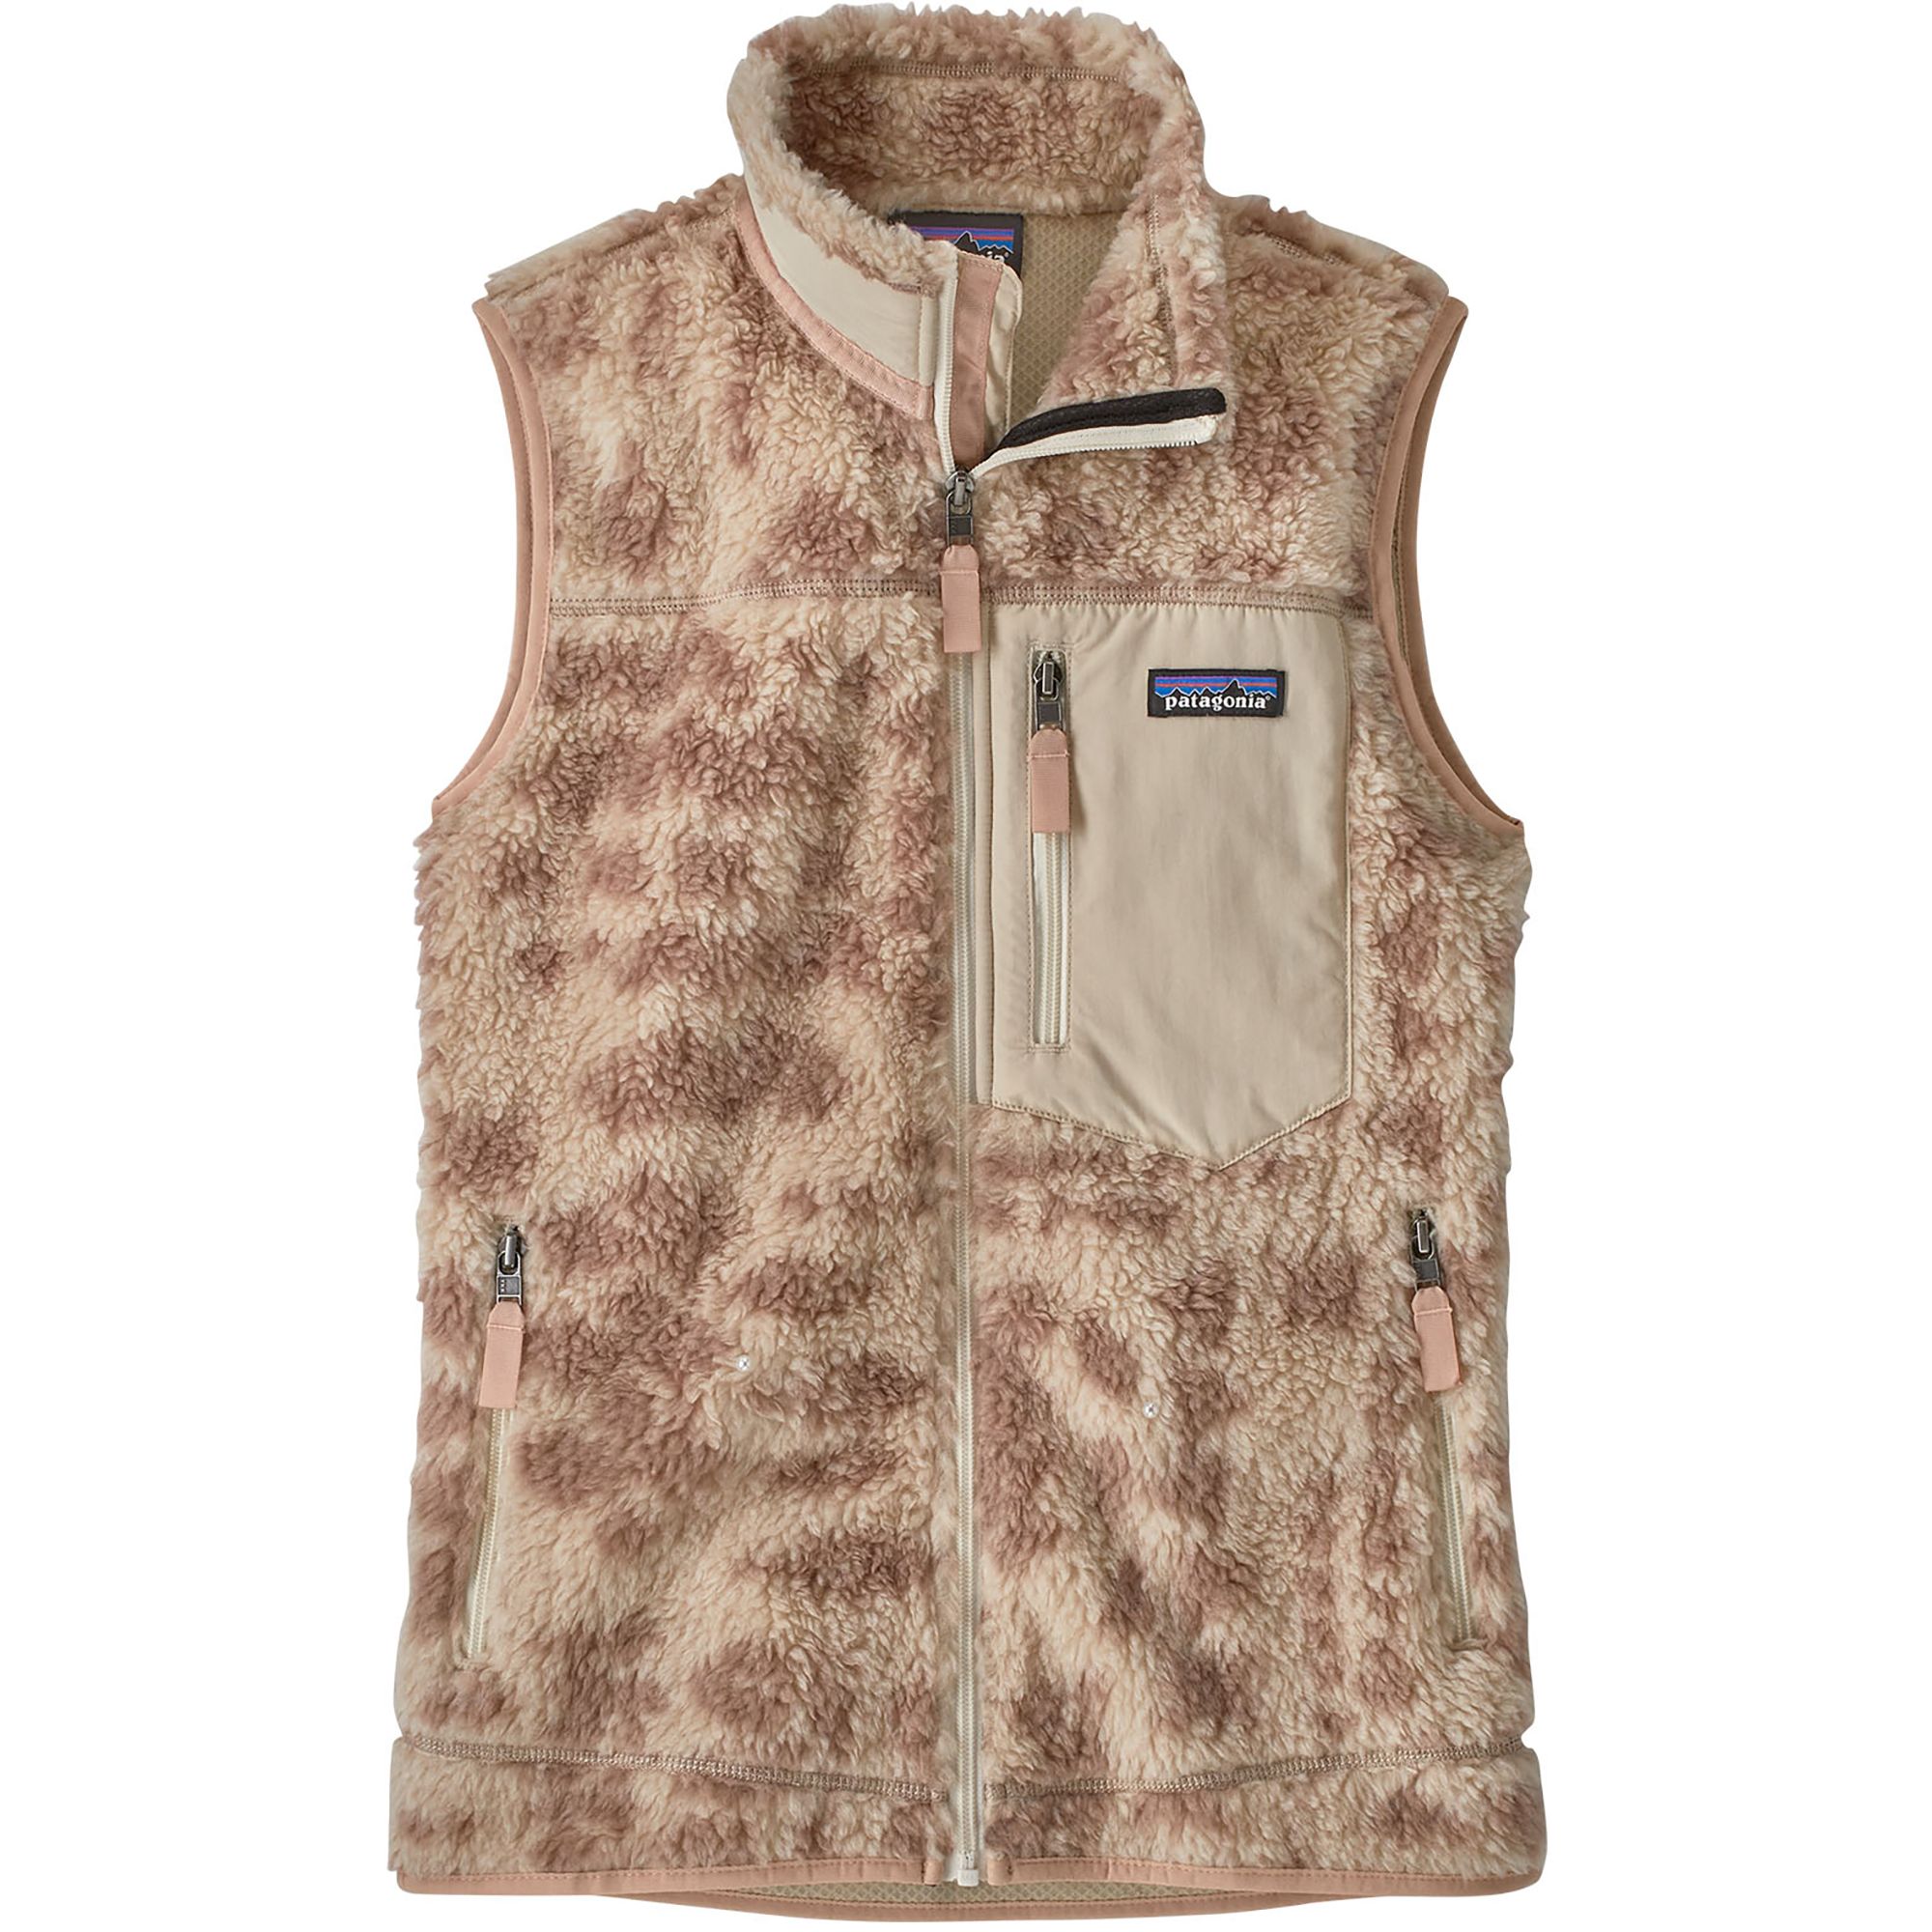 Patagonia Women's Classic Retro-X Fleece Vest (Wandering Woods/Dark Natural) $55.65 + Free Shipping